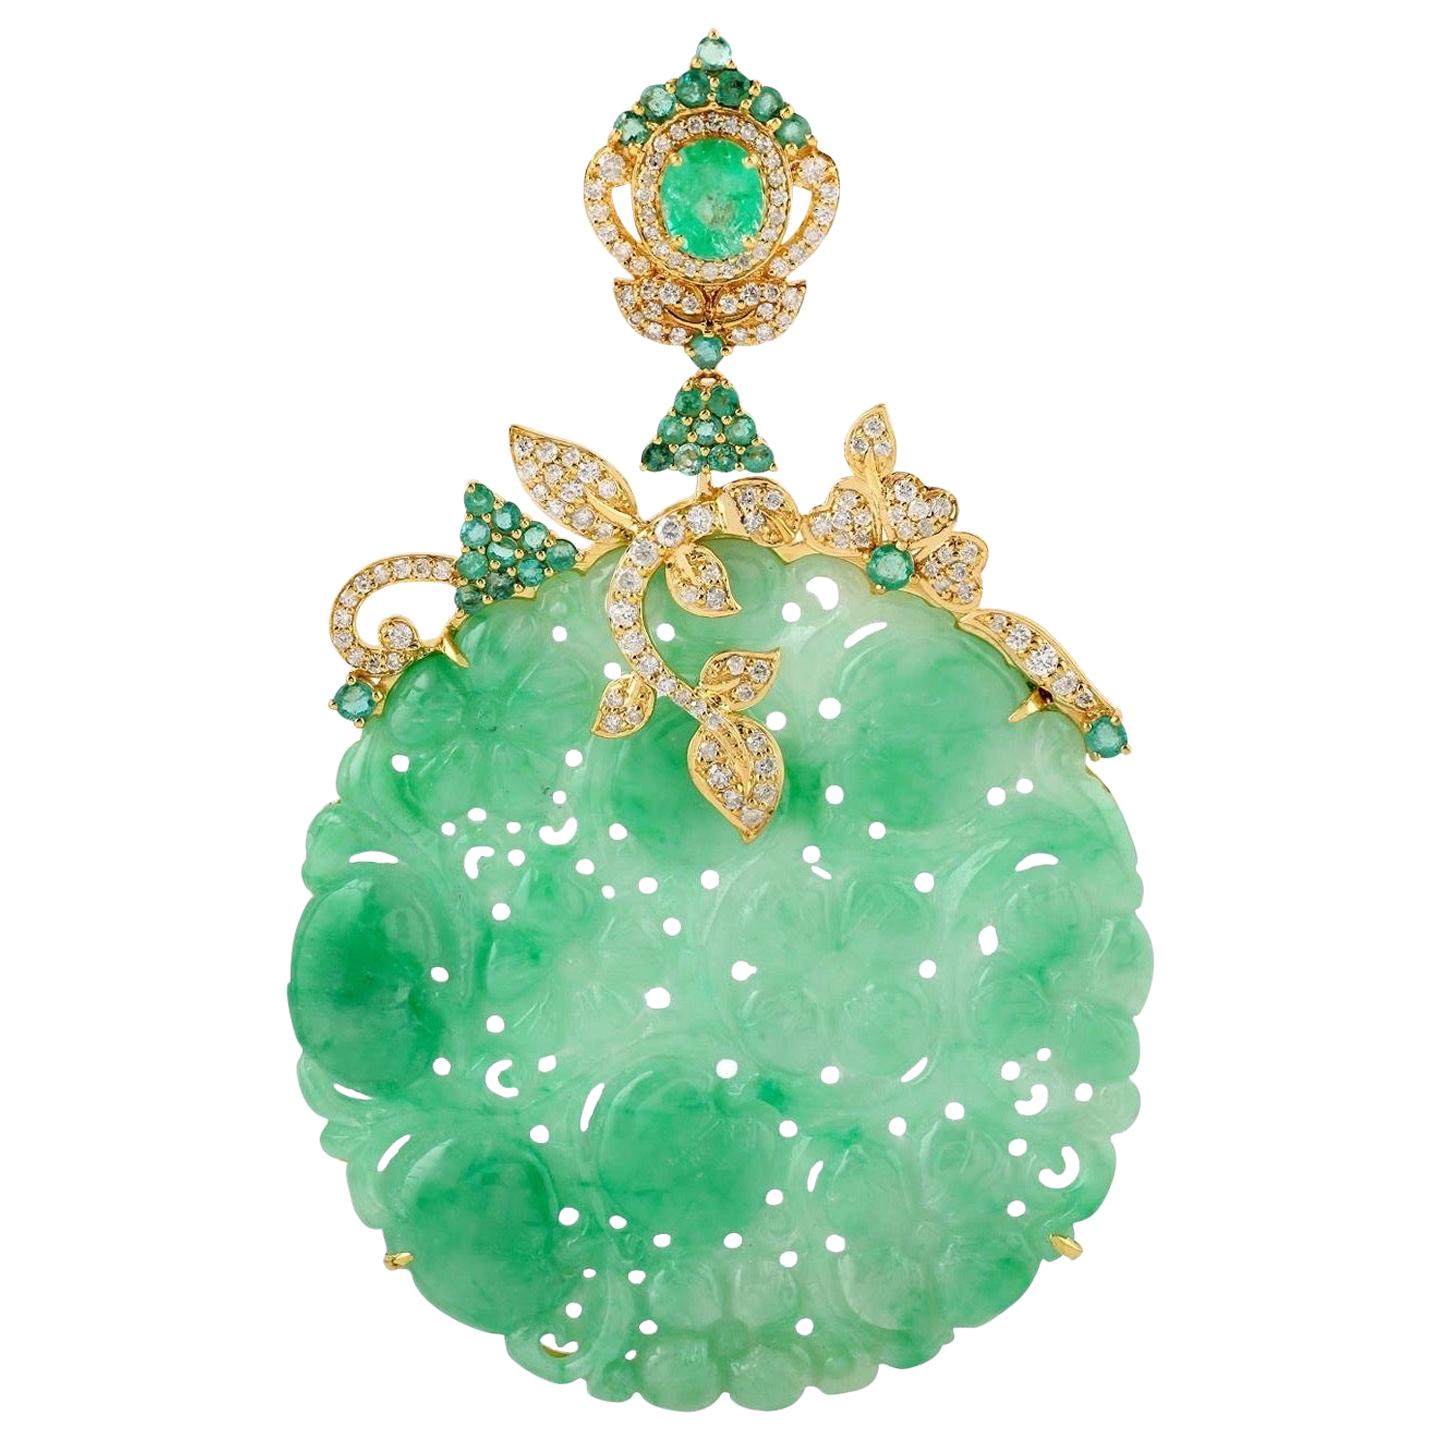 Collier pendentif en or 18 carats avec jade sculpté, émeraude et diamants de 50,51 carats